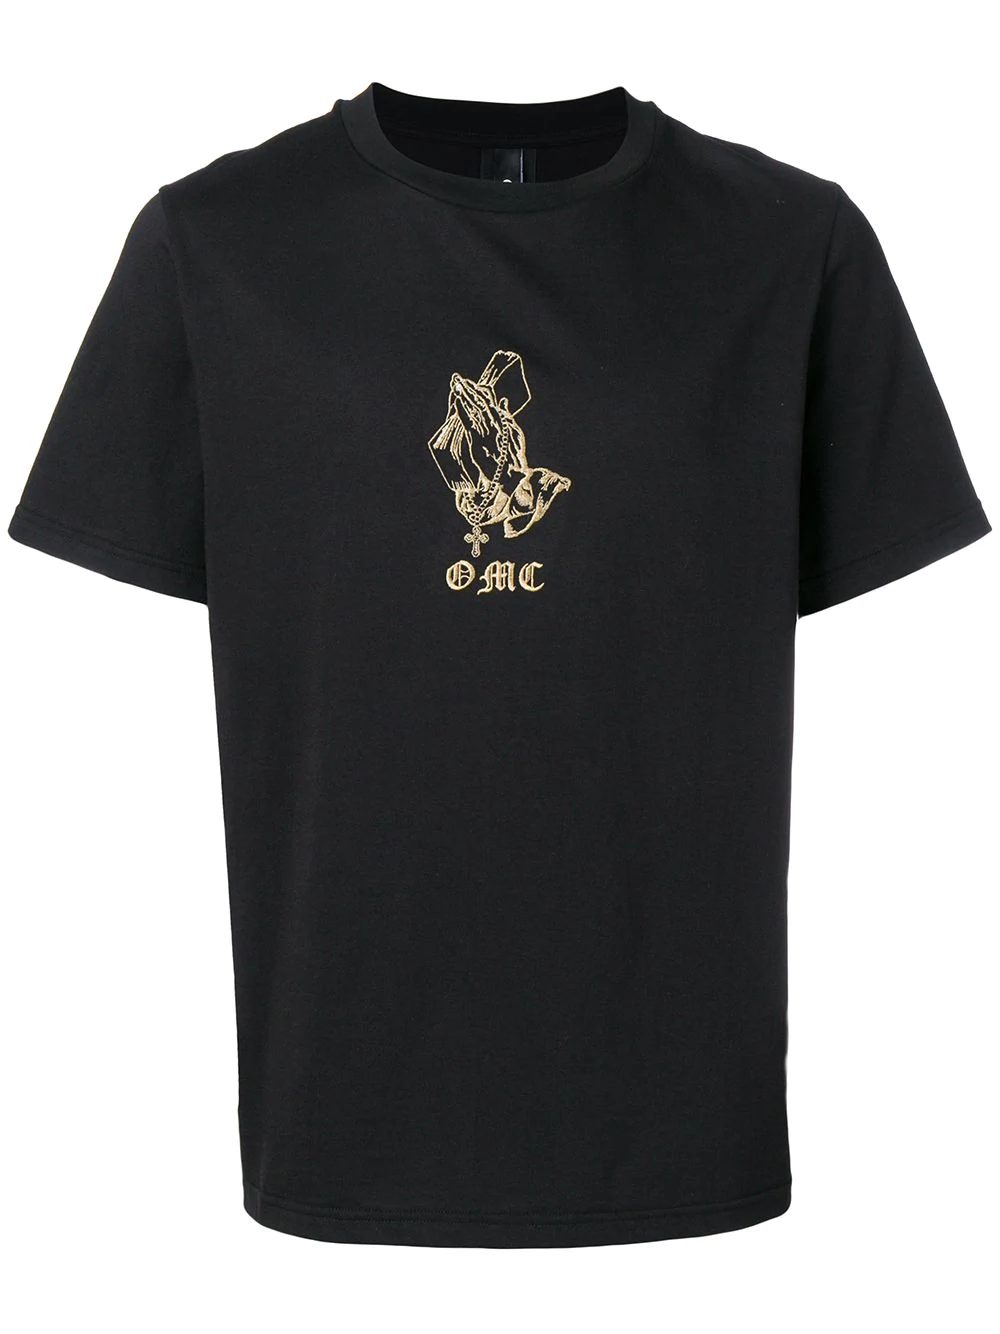 Omc Embroidered Prayer Logo T-shirt - Black | ModeSens